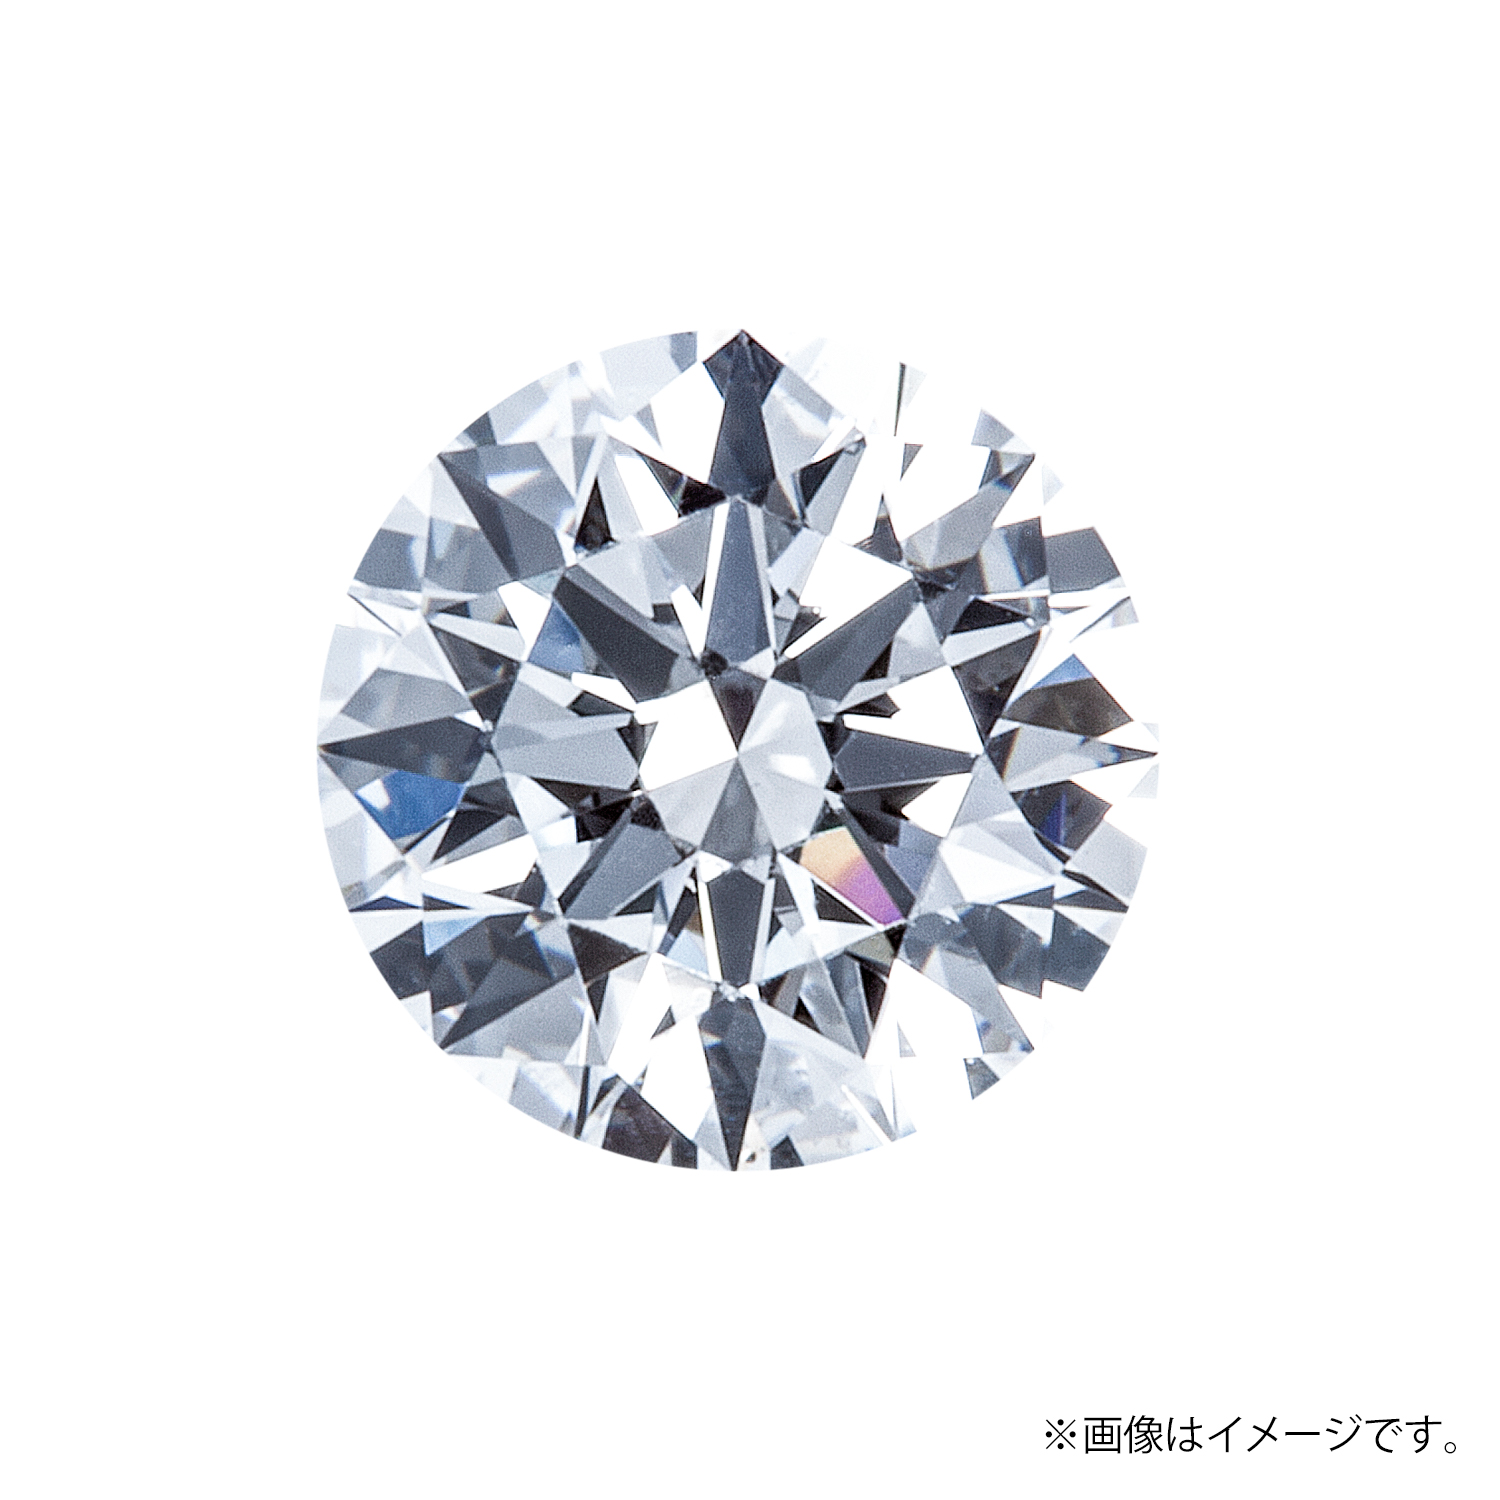 0.307ct Round ダイヤモンド / D / VVS1 / 3EX-H&C